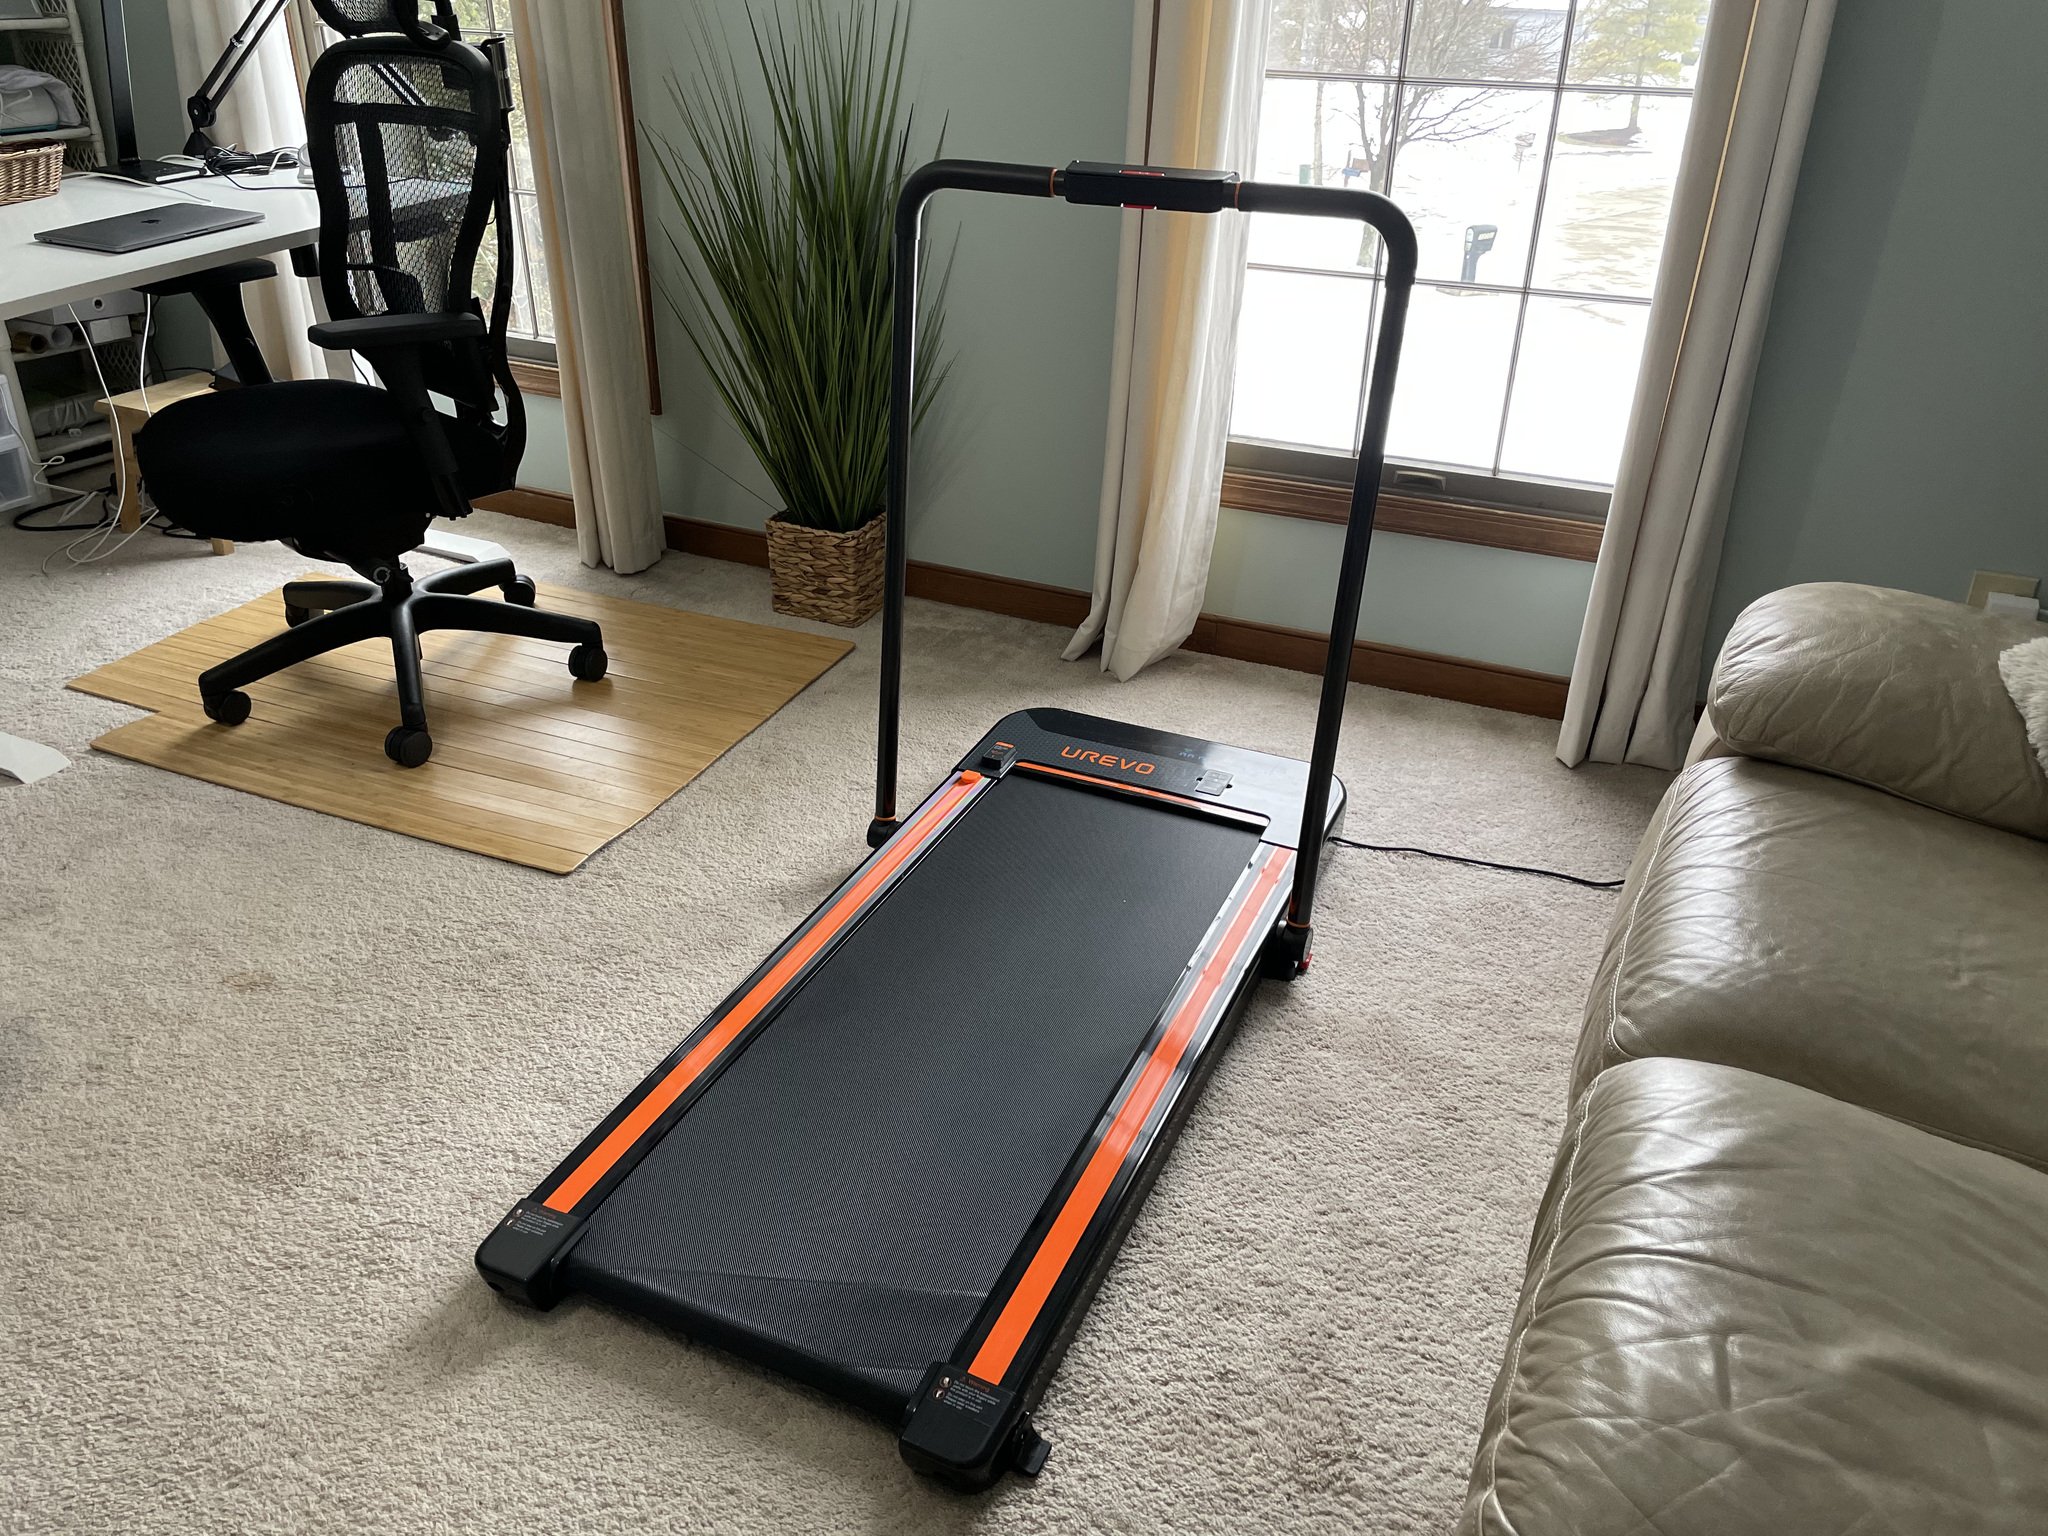 Urevo 2 In 1 Treadmill Lifestyle